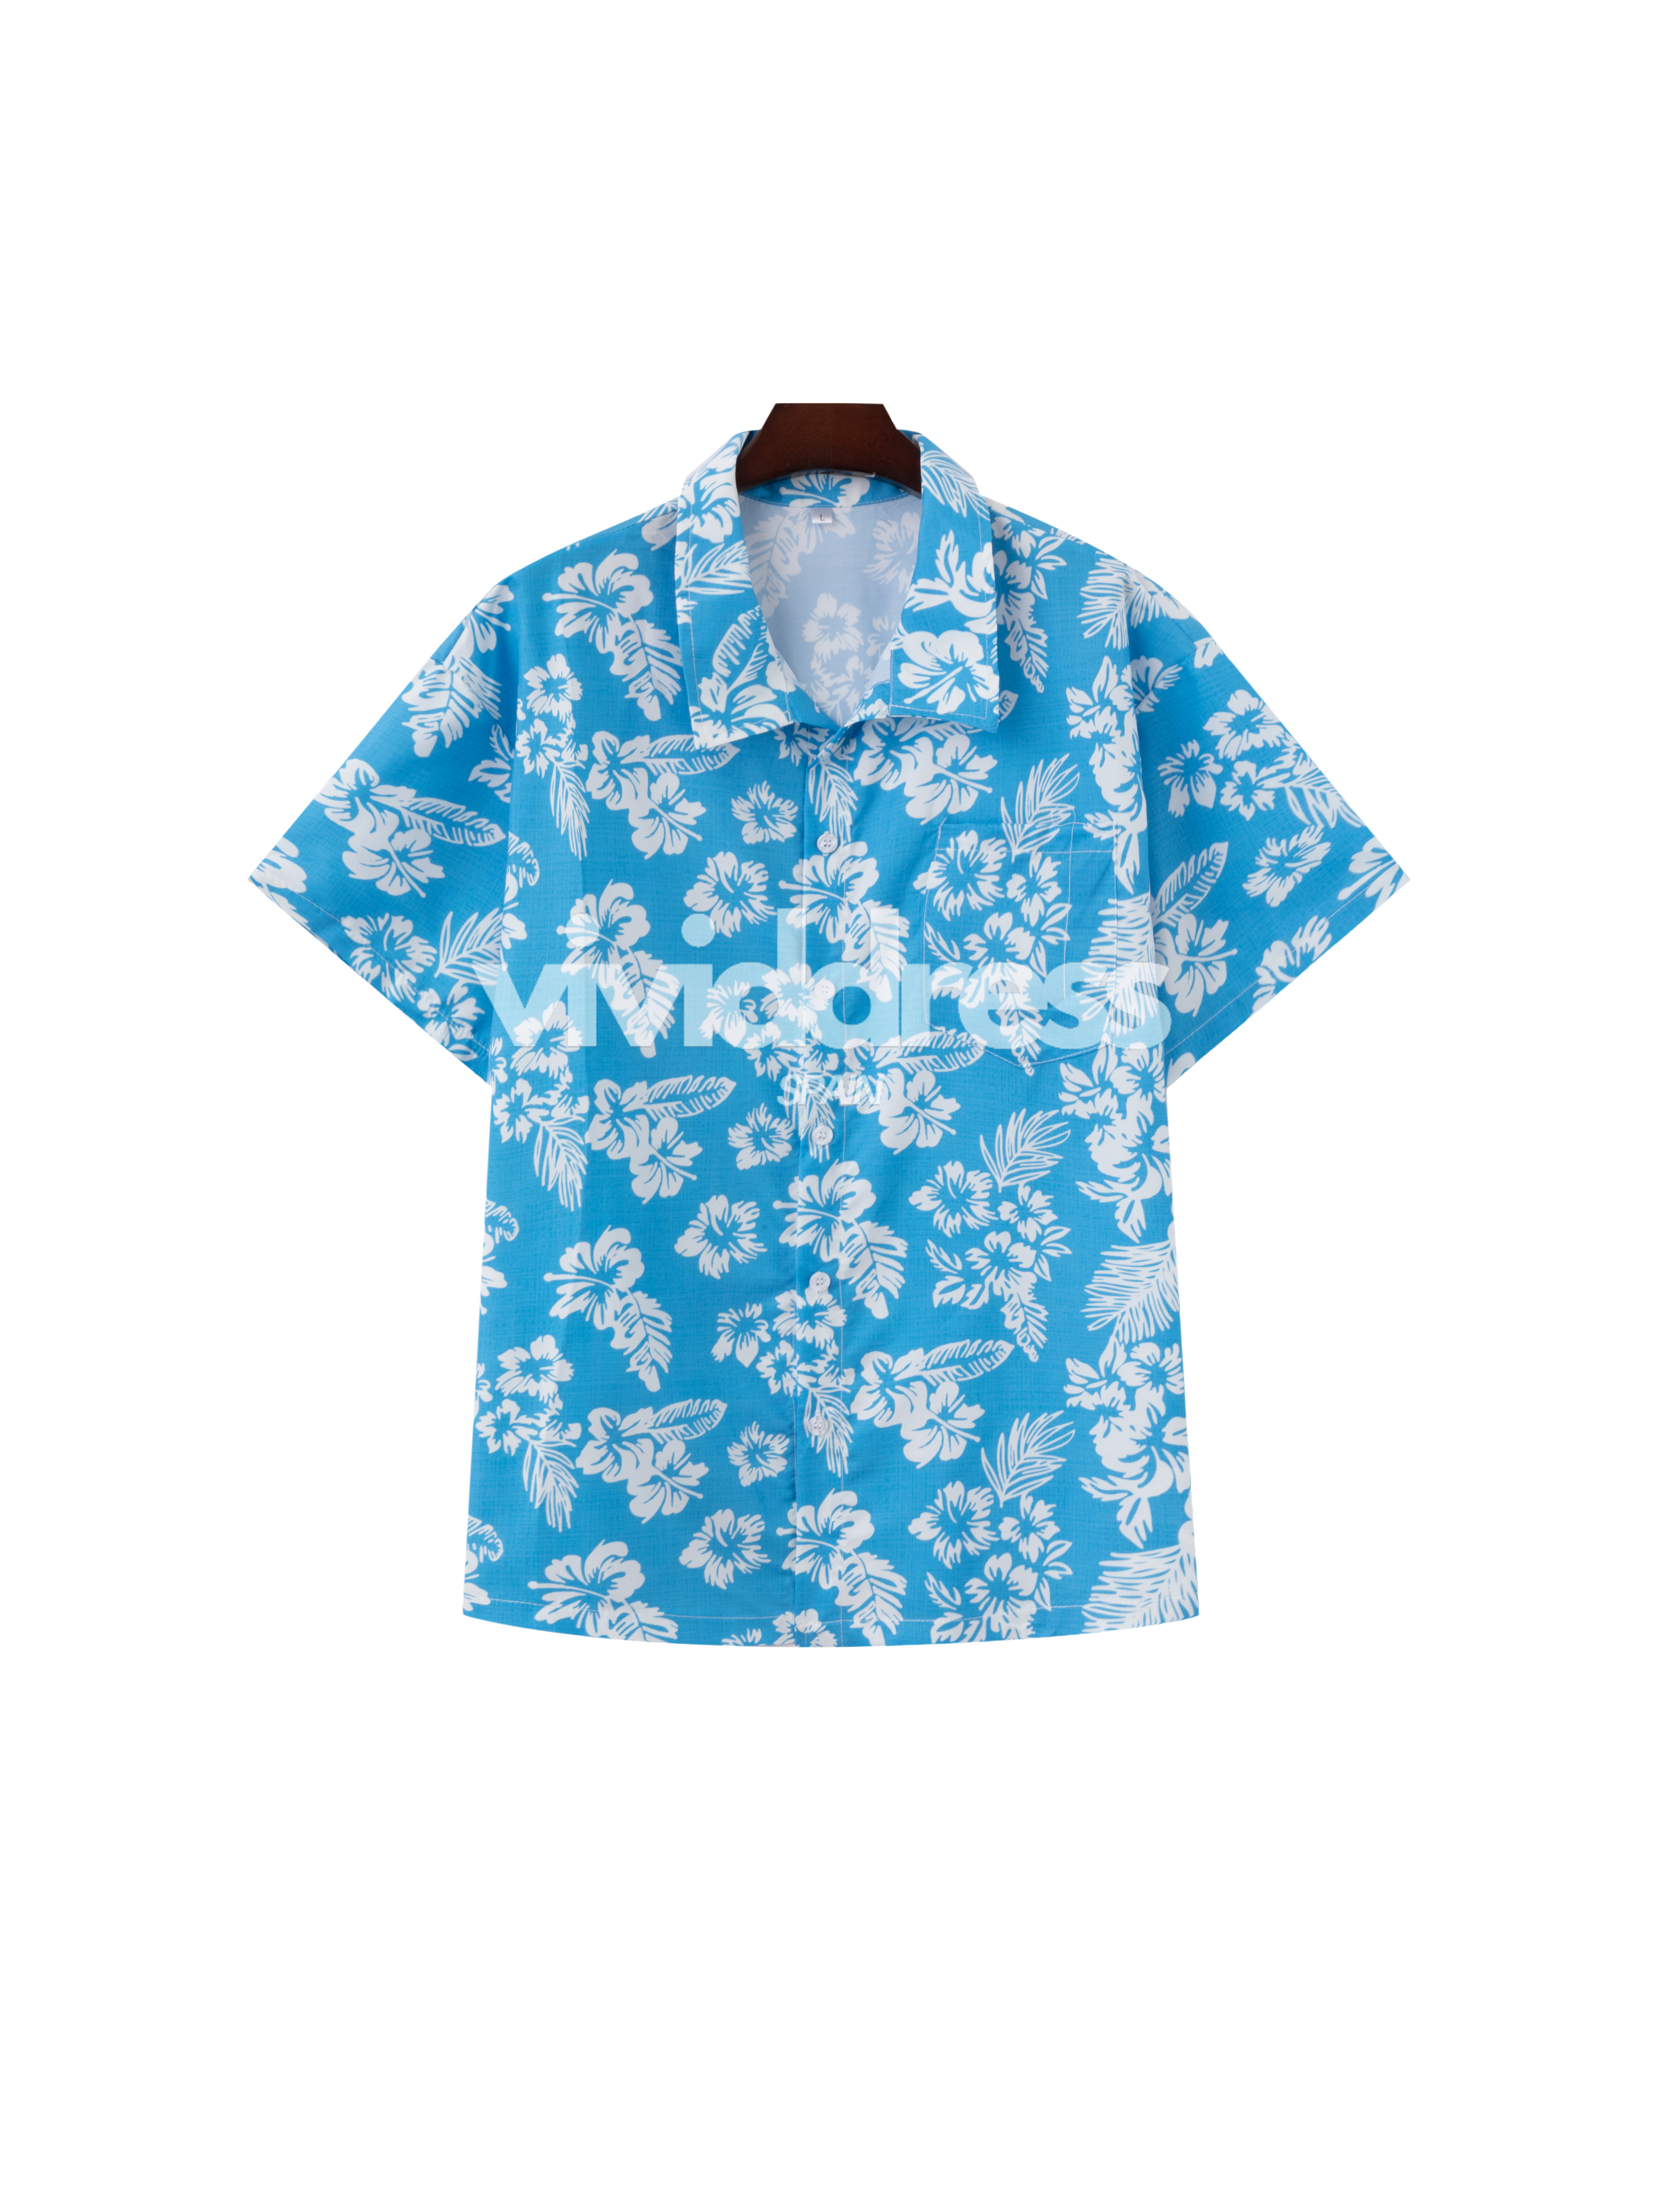 Men's Floral Print Blue Summer Holiday Short Sleeve Shirt